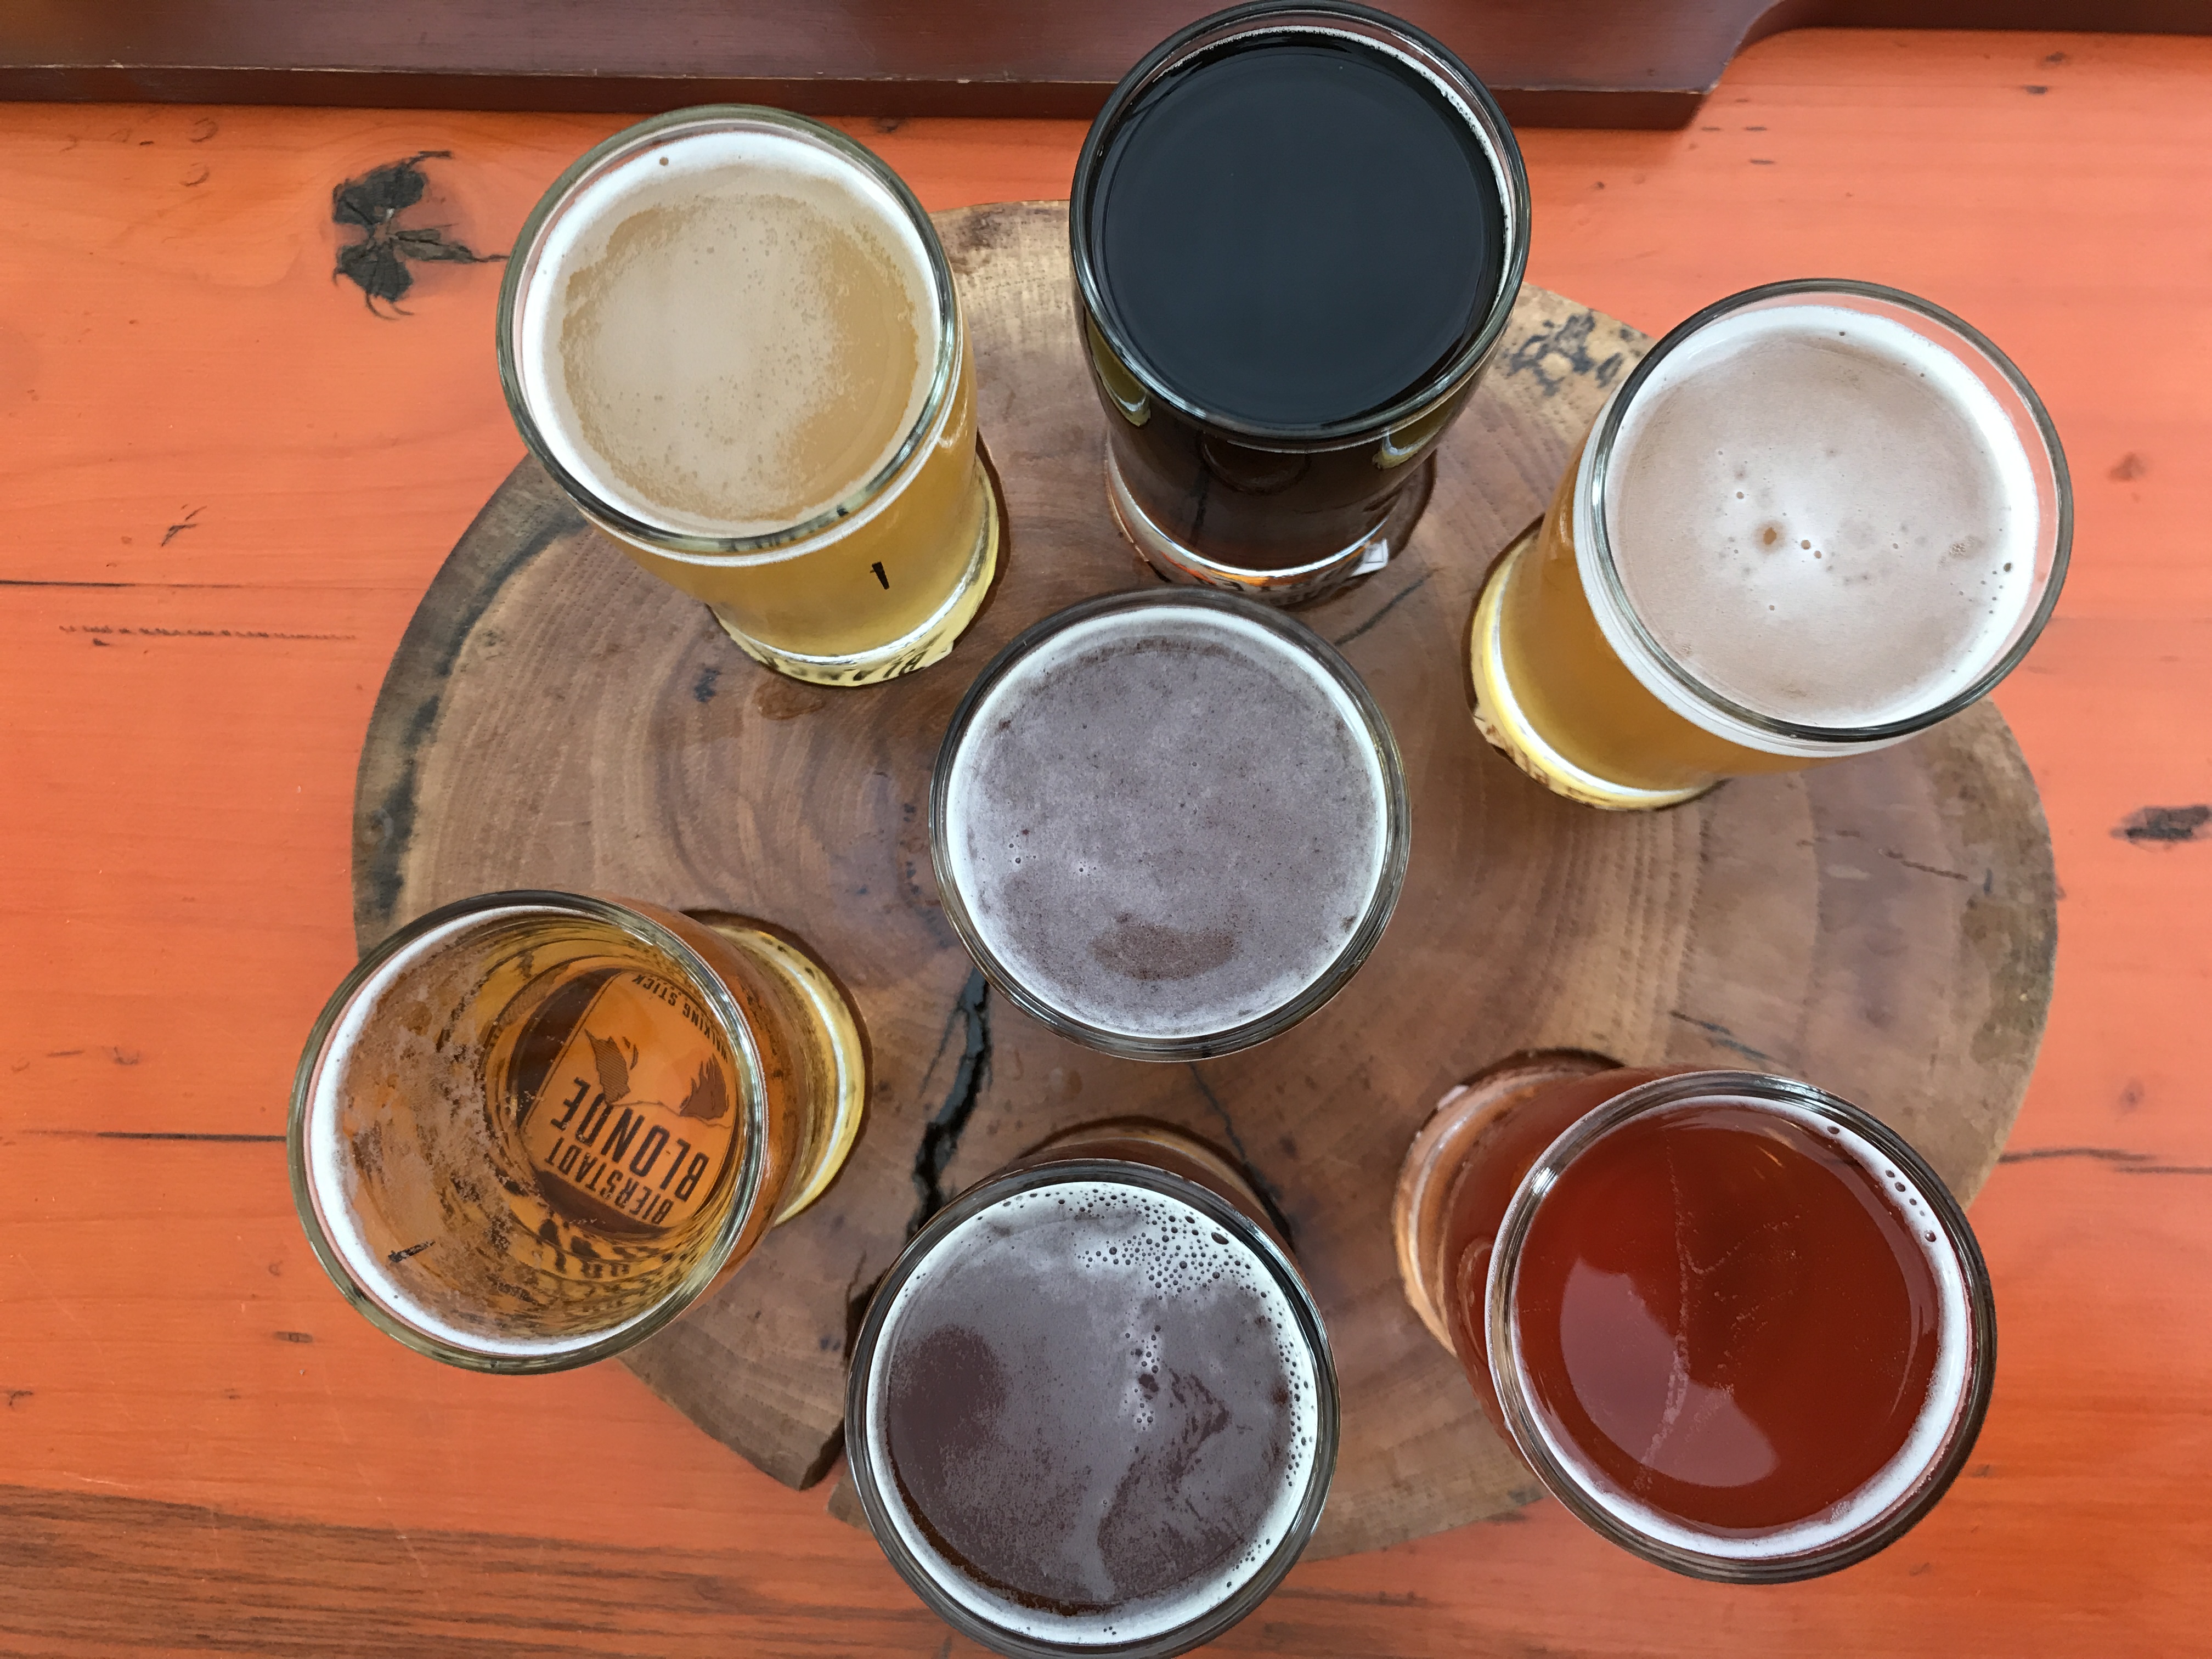 Samper platter of beers